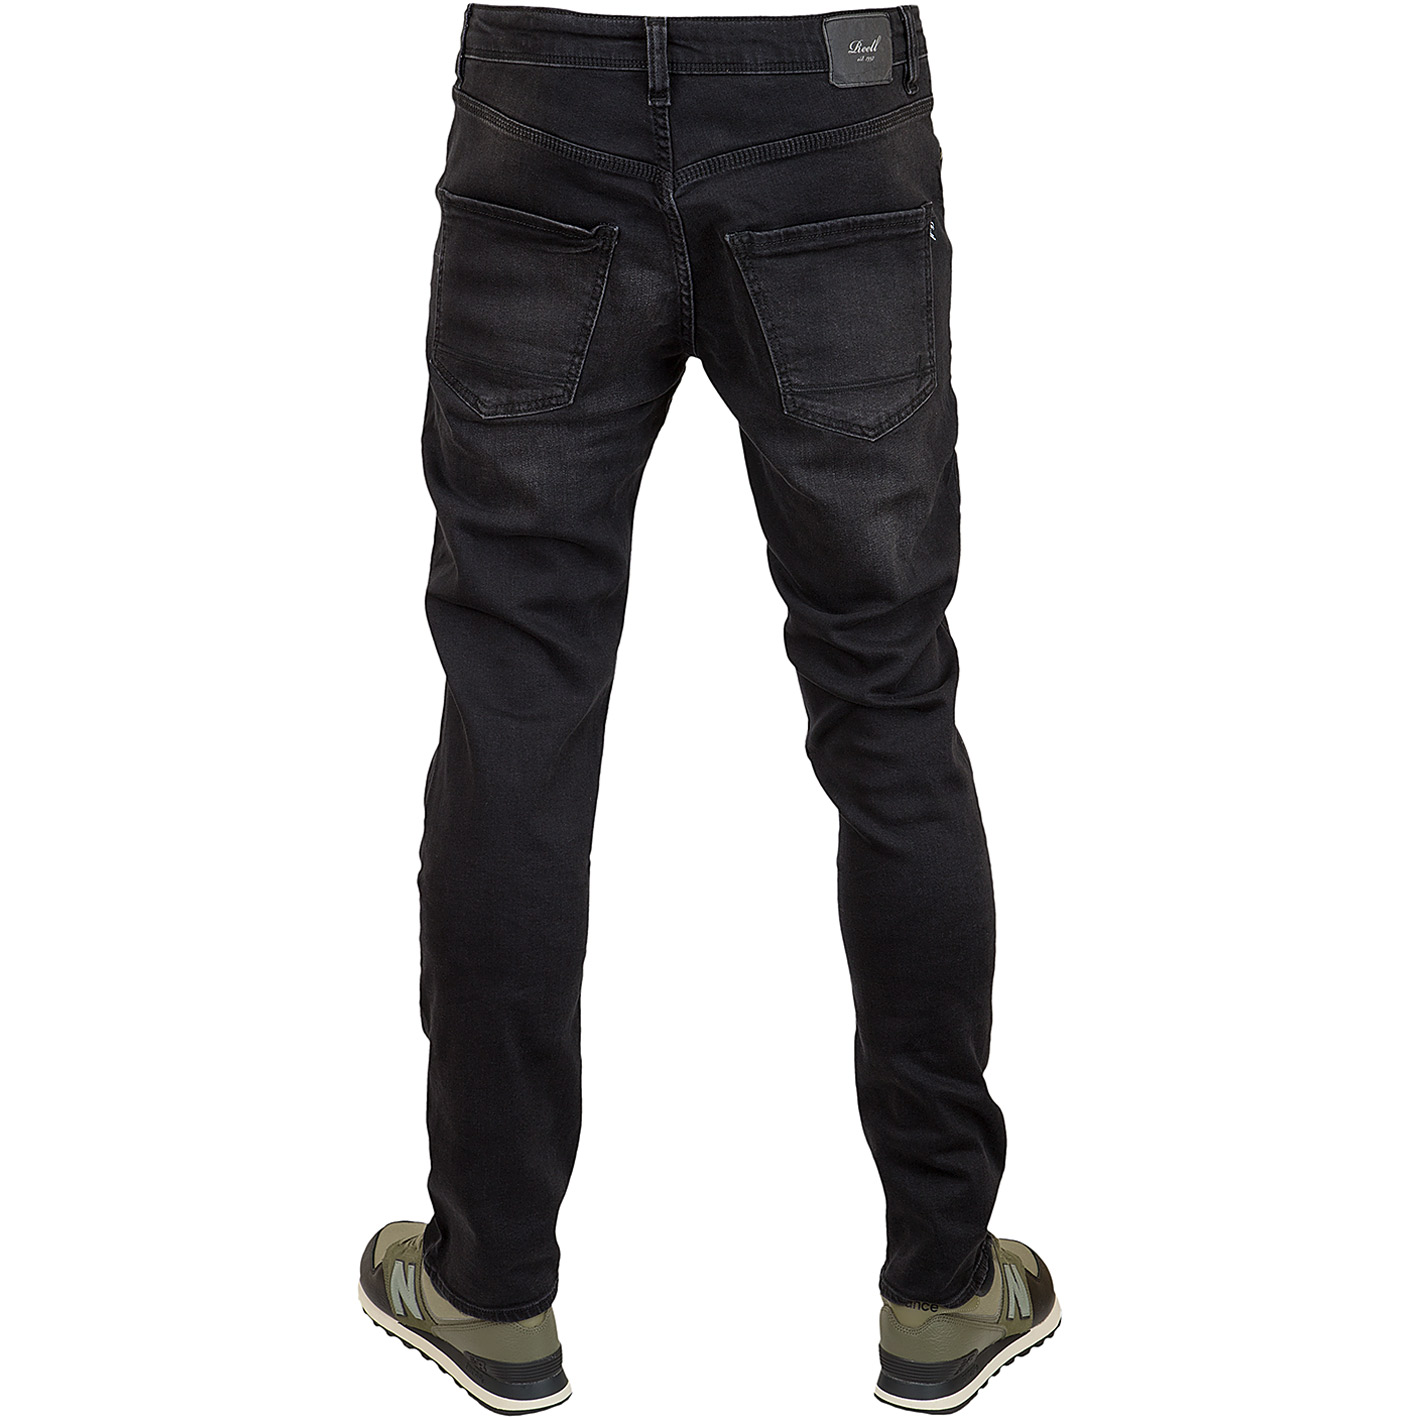 ☆ Reell Jeans Nova 2 schwarz - hier bestellen!